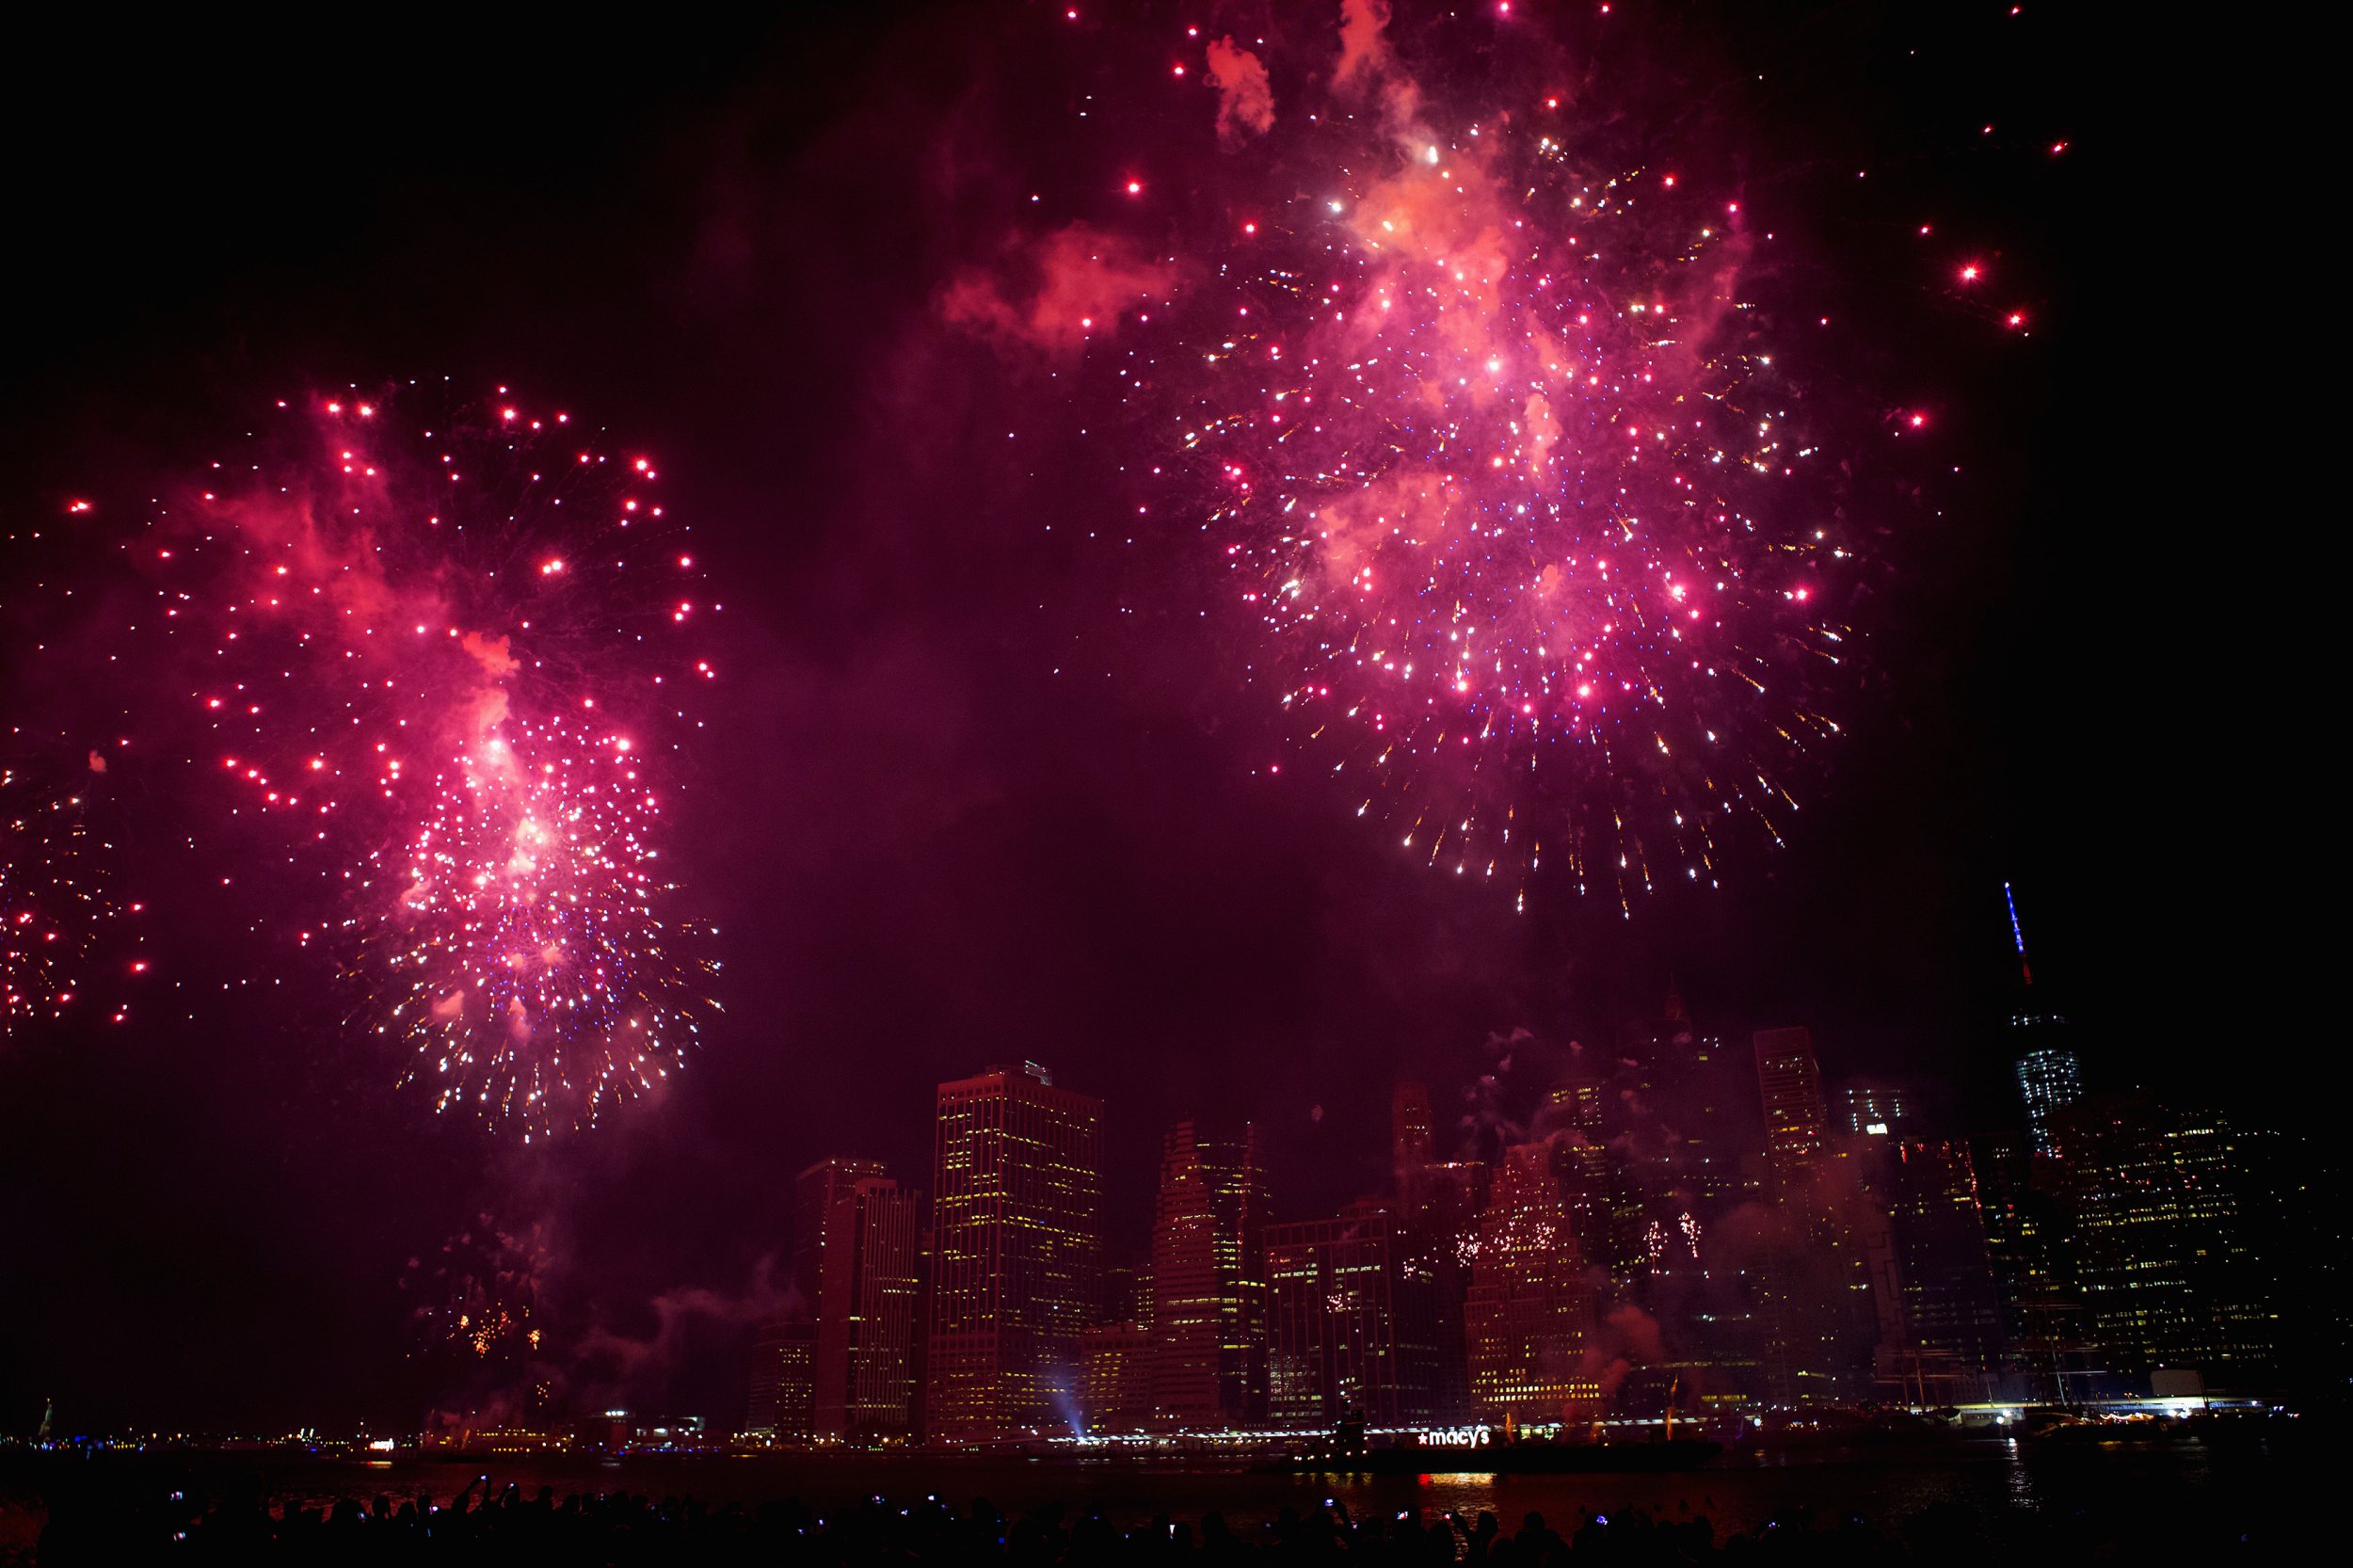 Macys Fourth of July Fireworks 2014 08